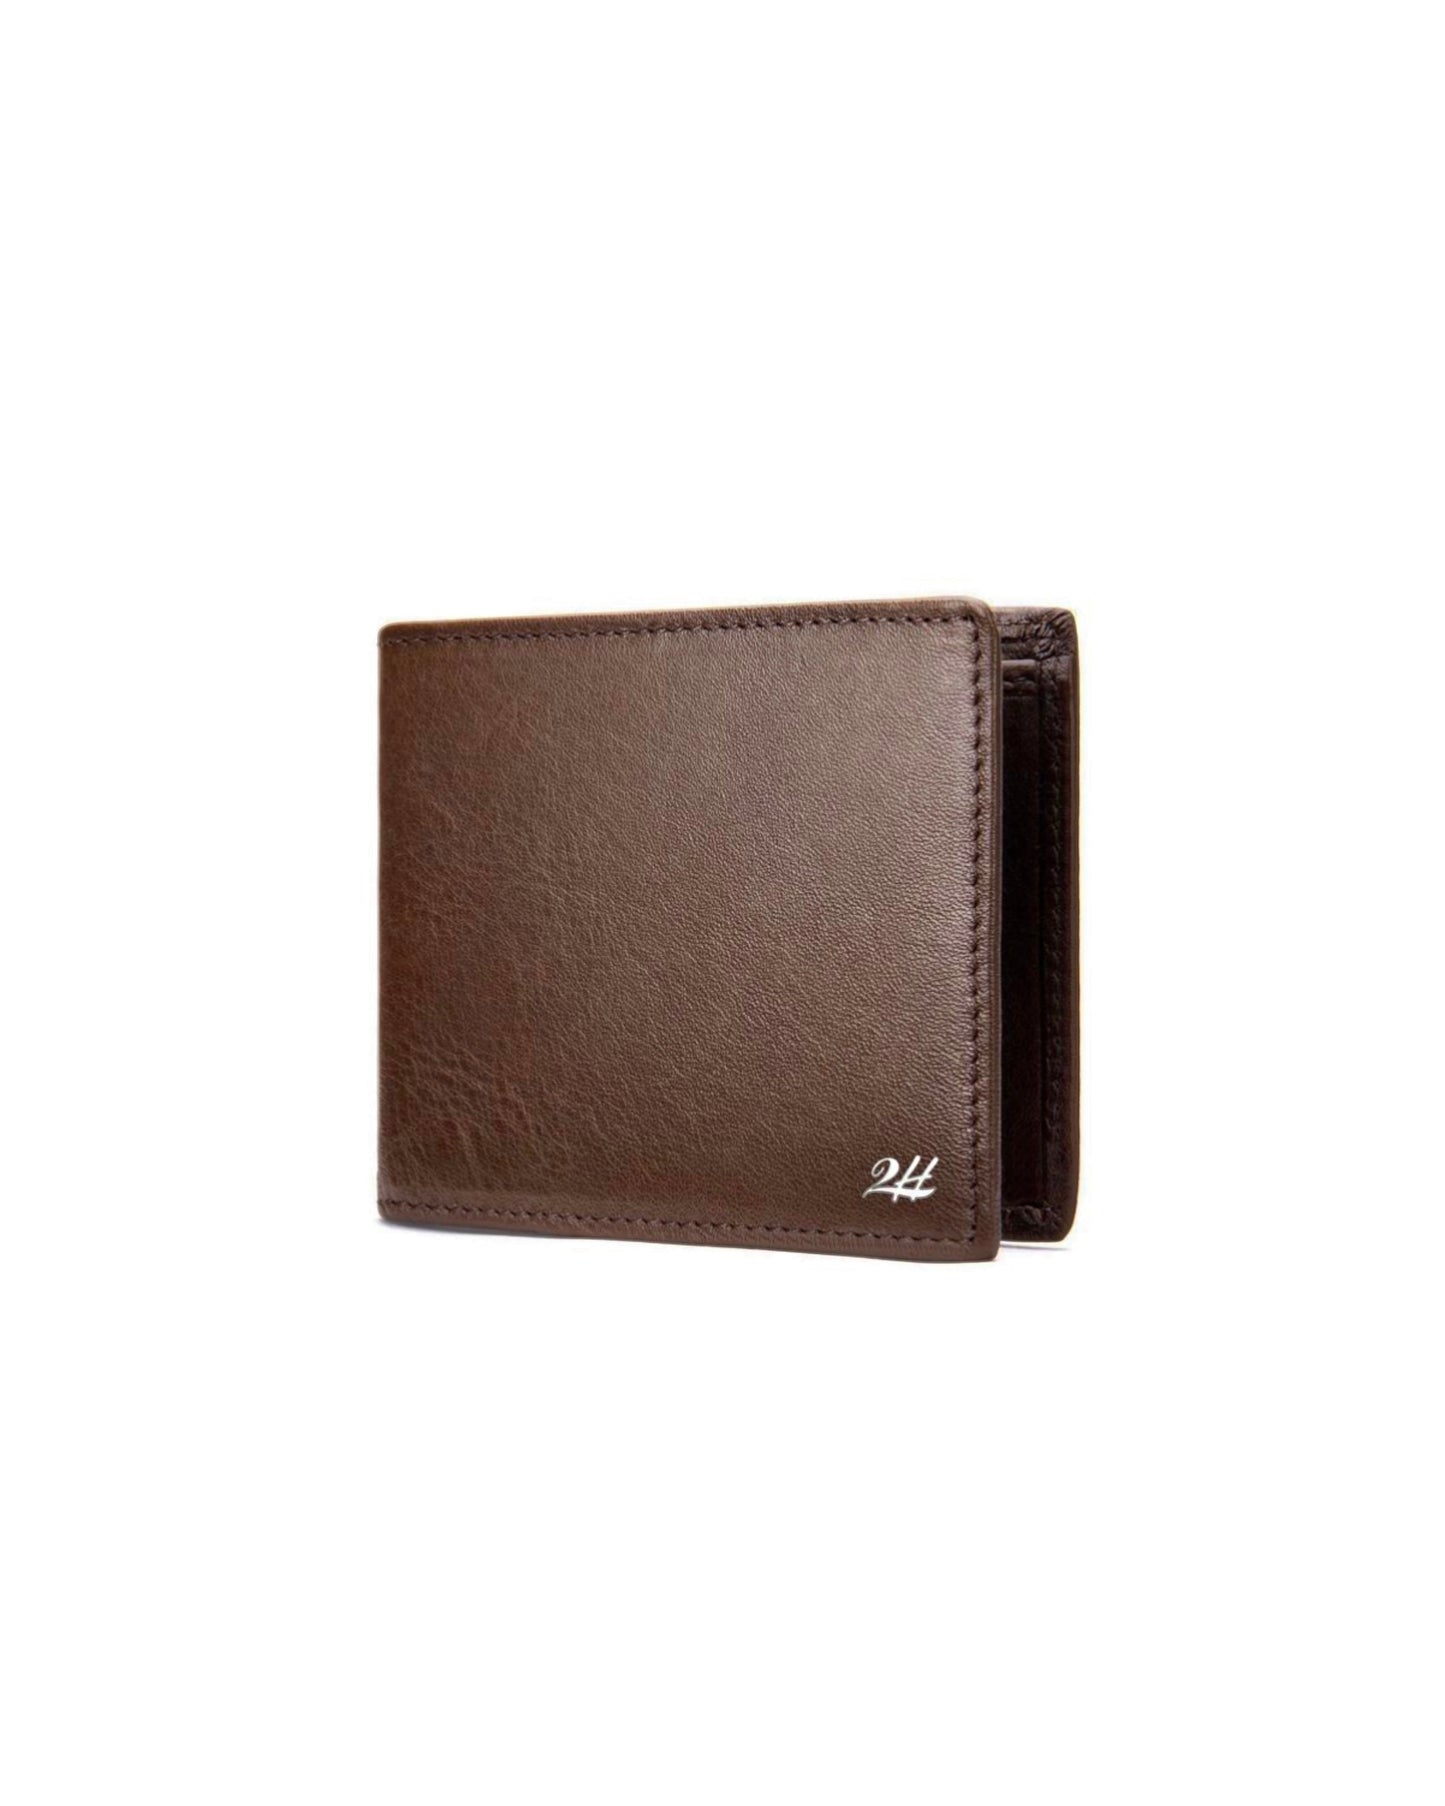 2H Brown Genuine Leather wallet